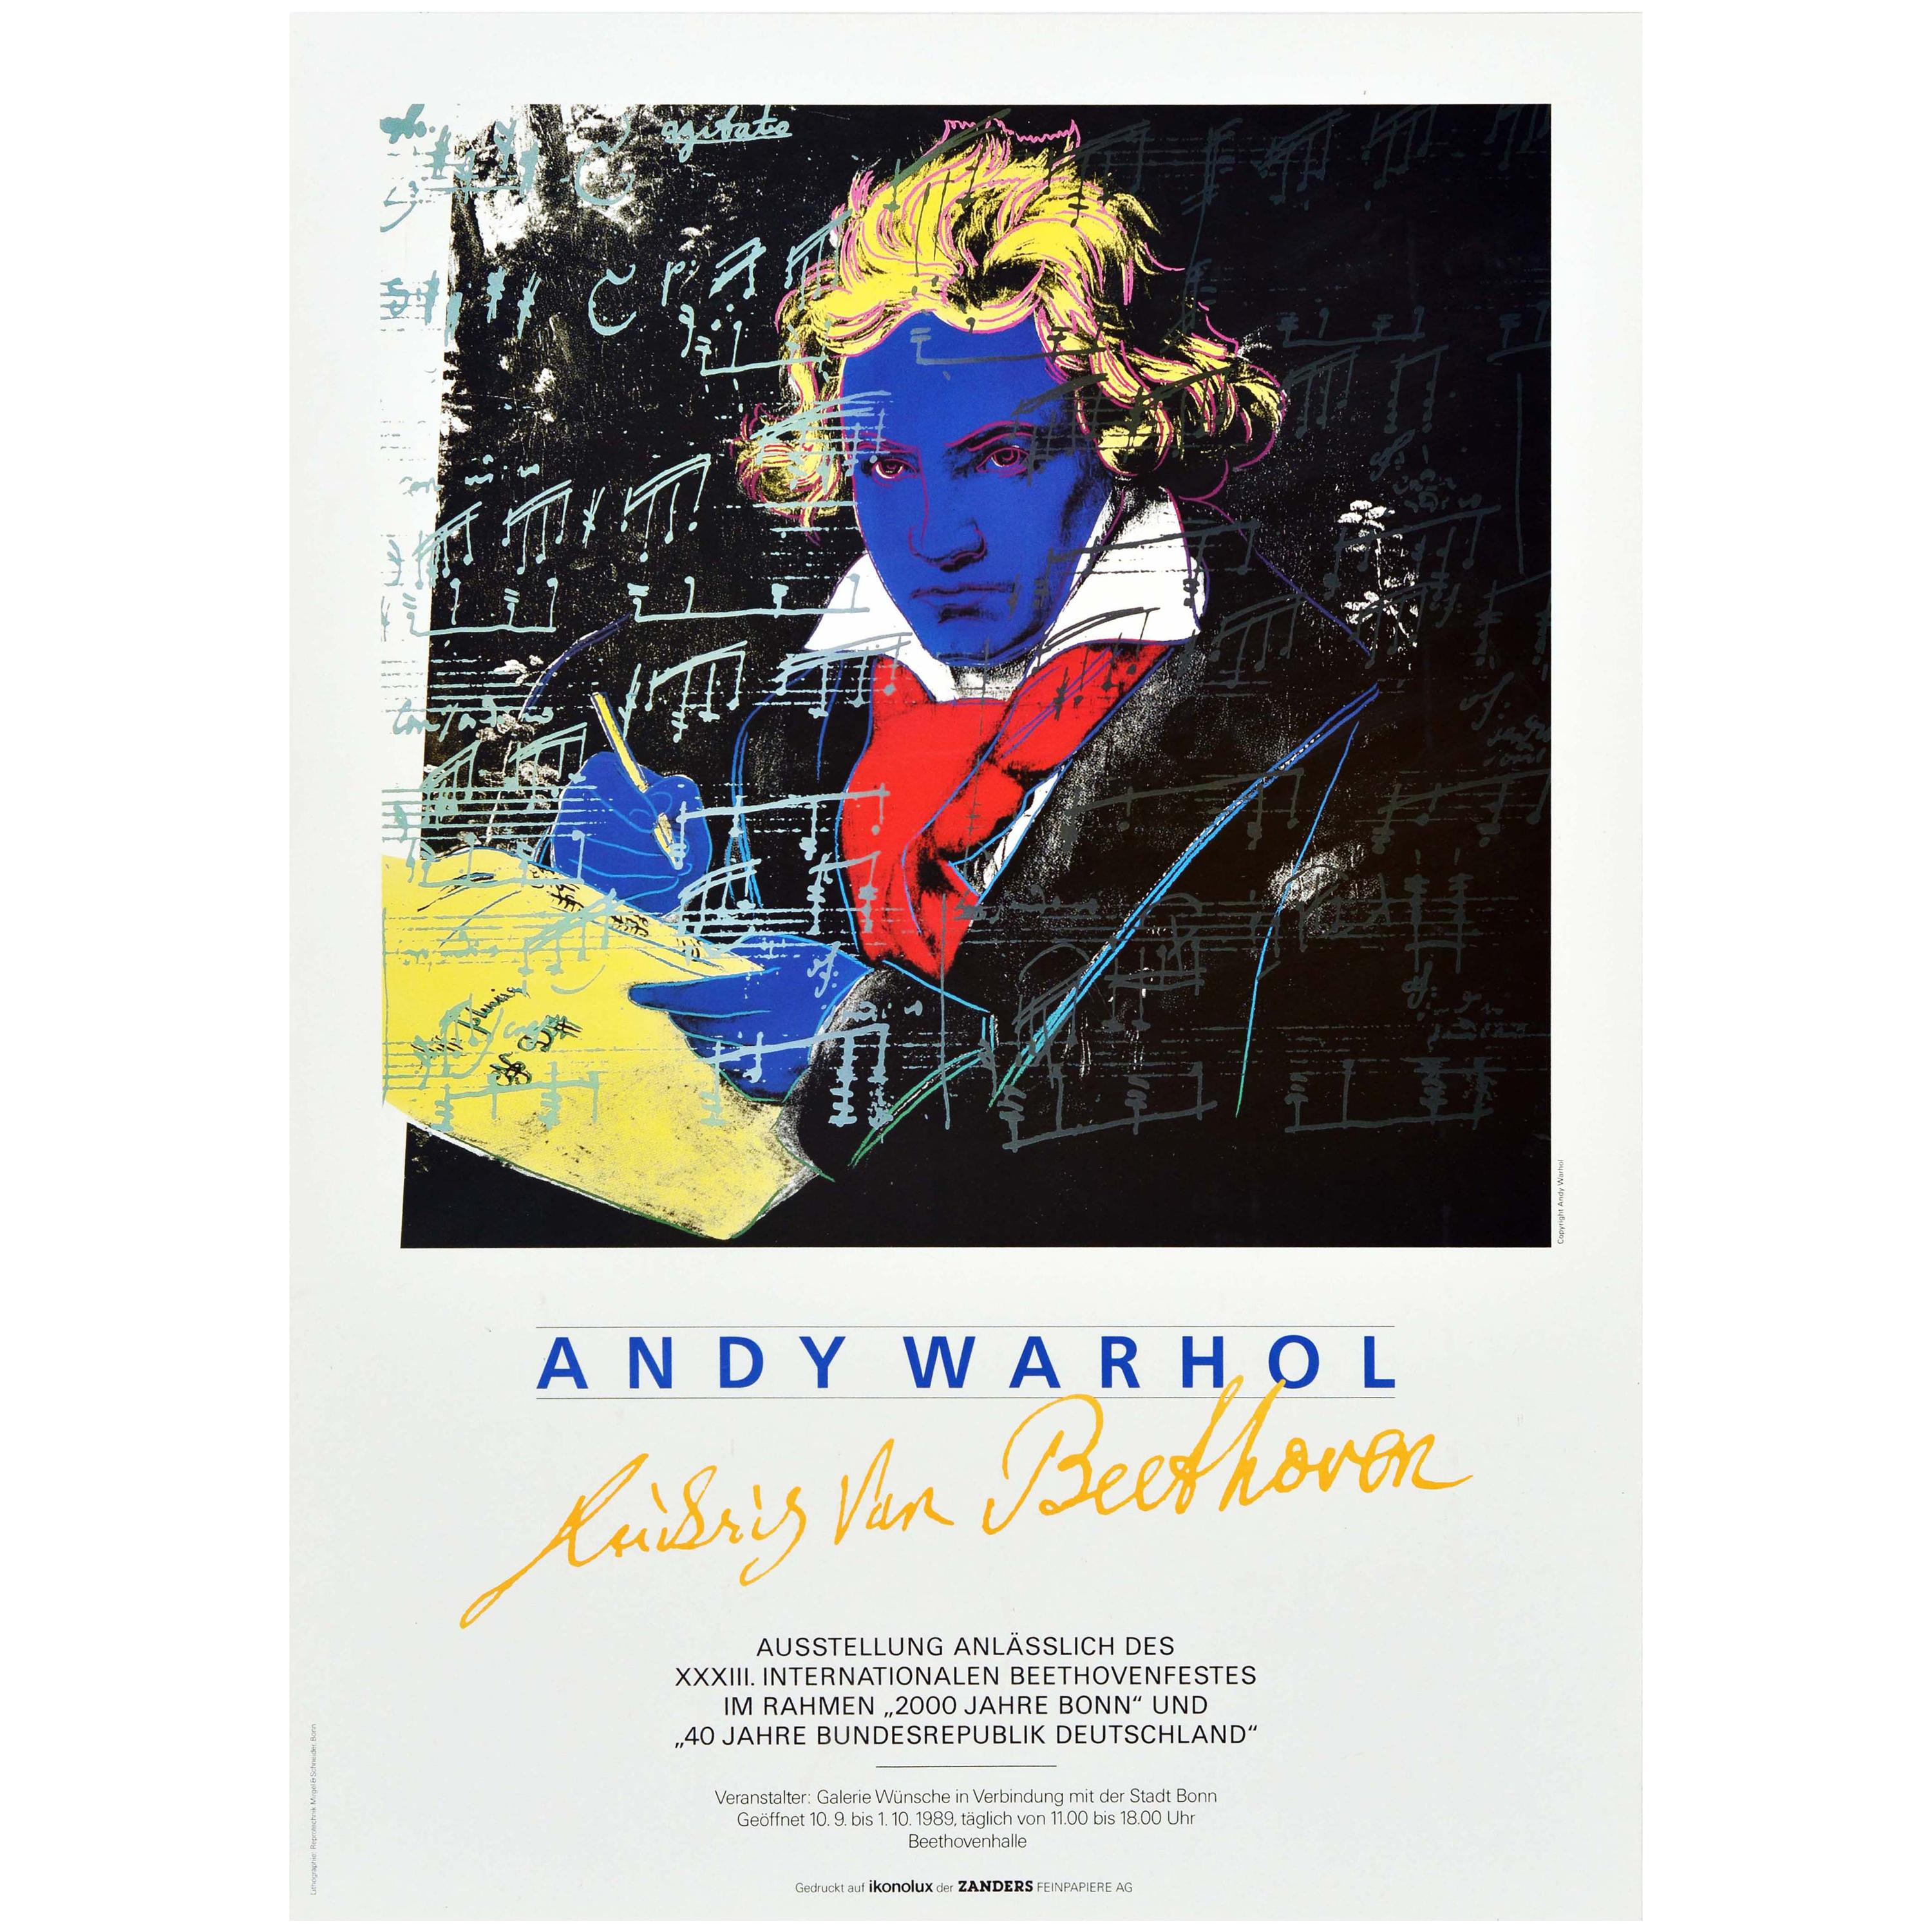 Original Vintage Poster Andy Warhol Ludwig Van Beethoven Festival Art Exhibition